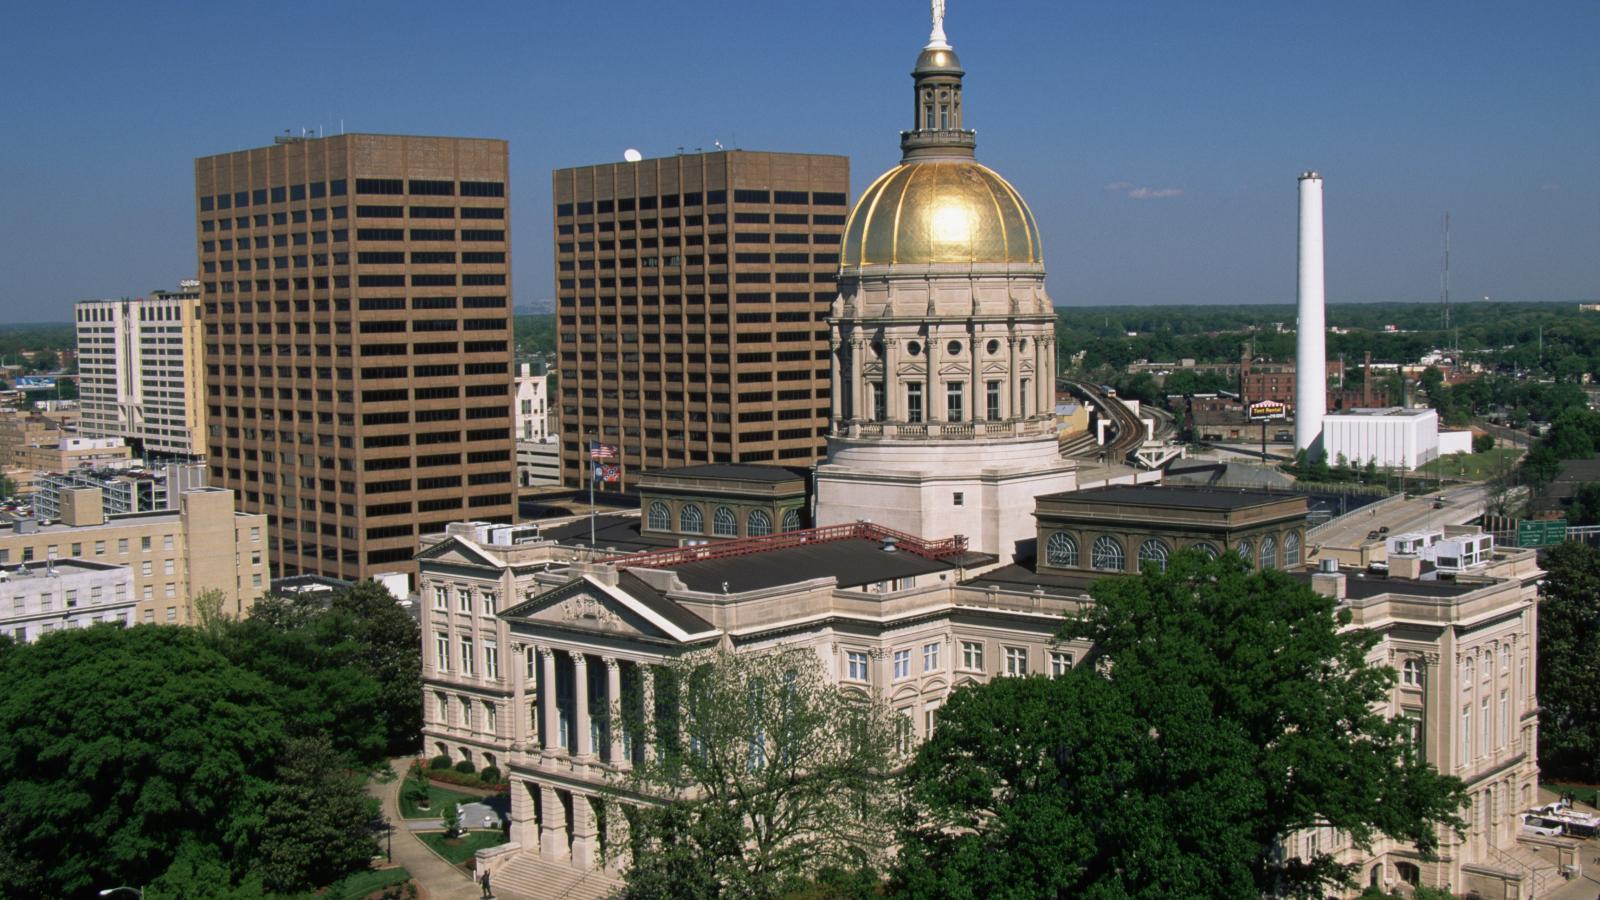 The Georgia State Capitol